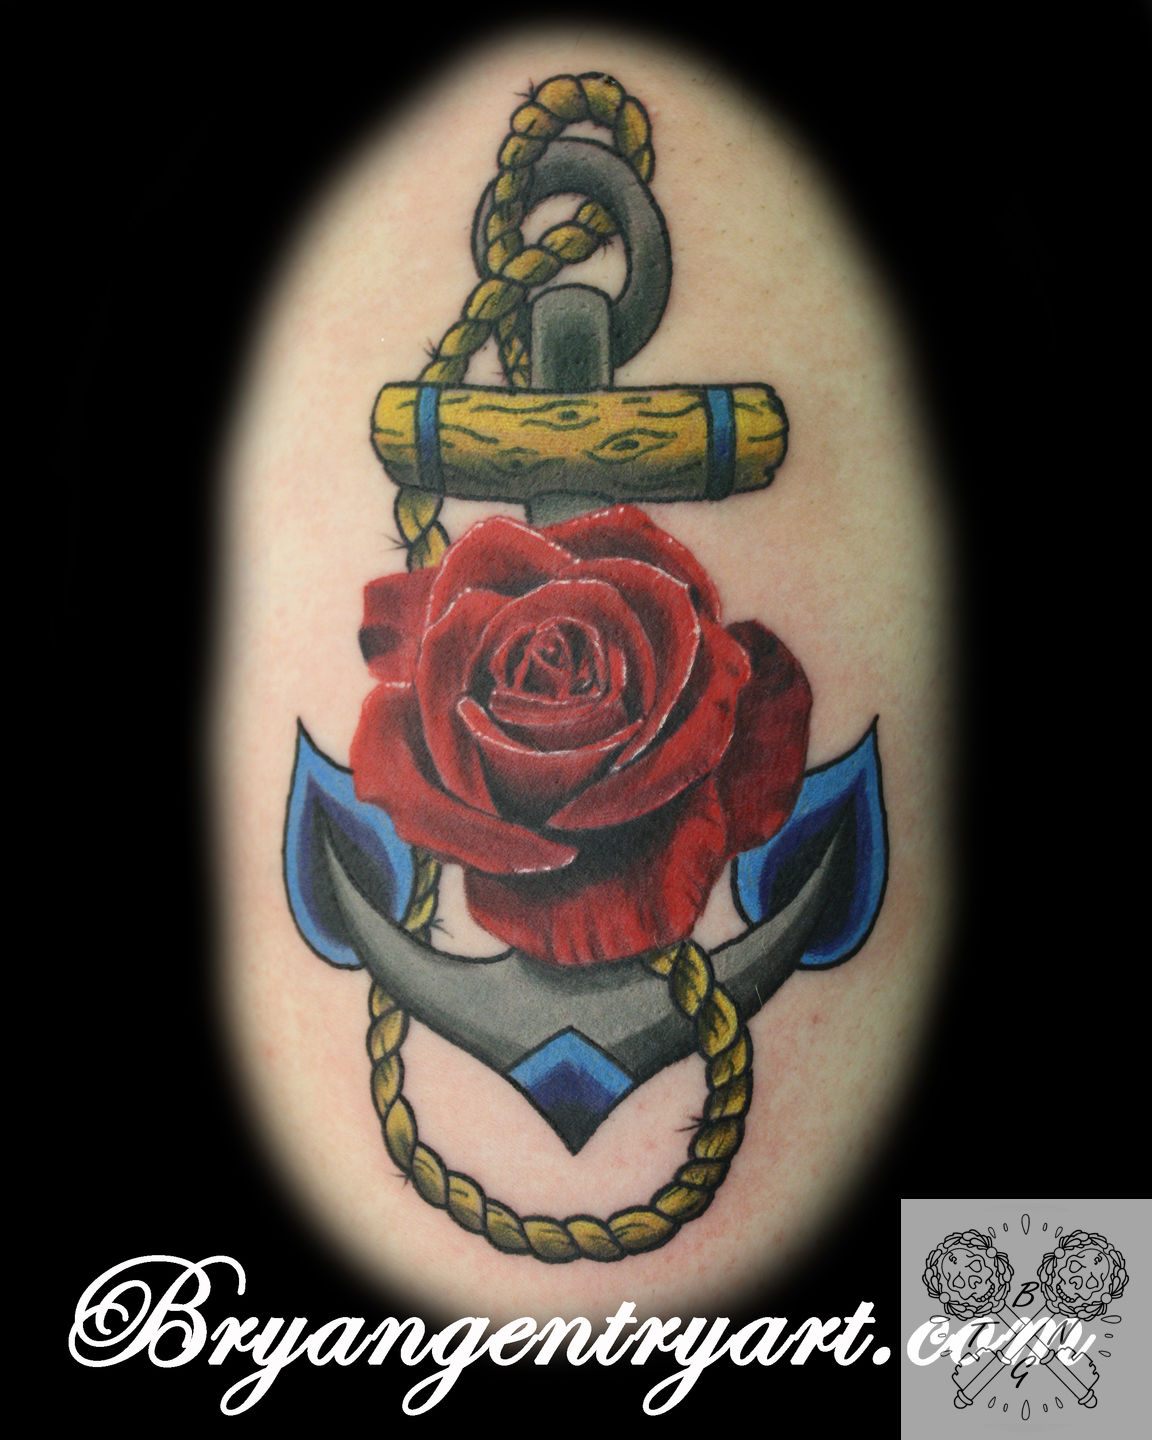 temporary tattoo anchor rose body art sexy party favor | eBay